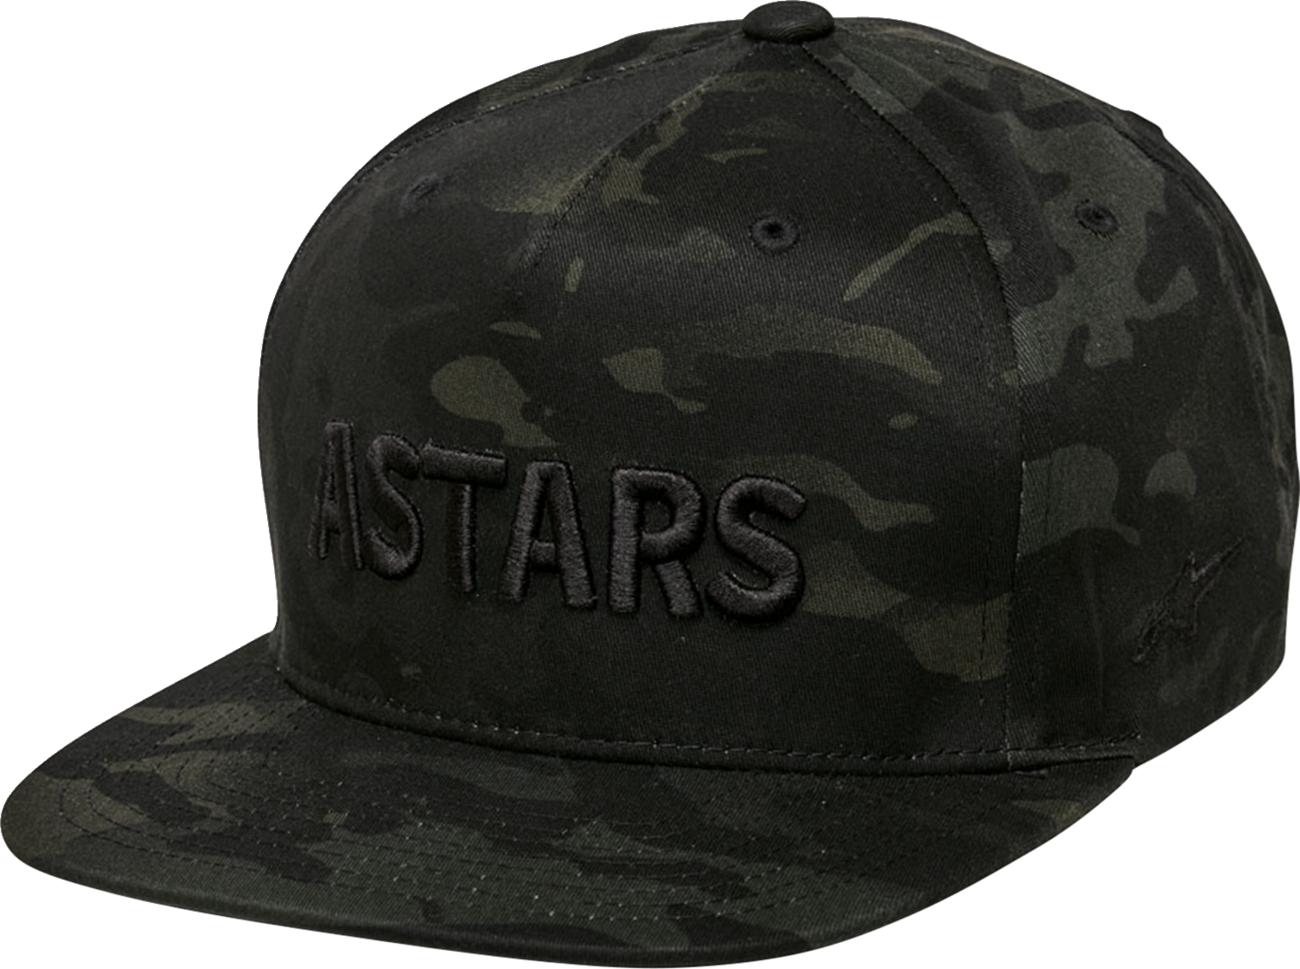 ALPINESTARS Gillis Hat - Black/Black - One Size 1233815901010OS